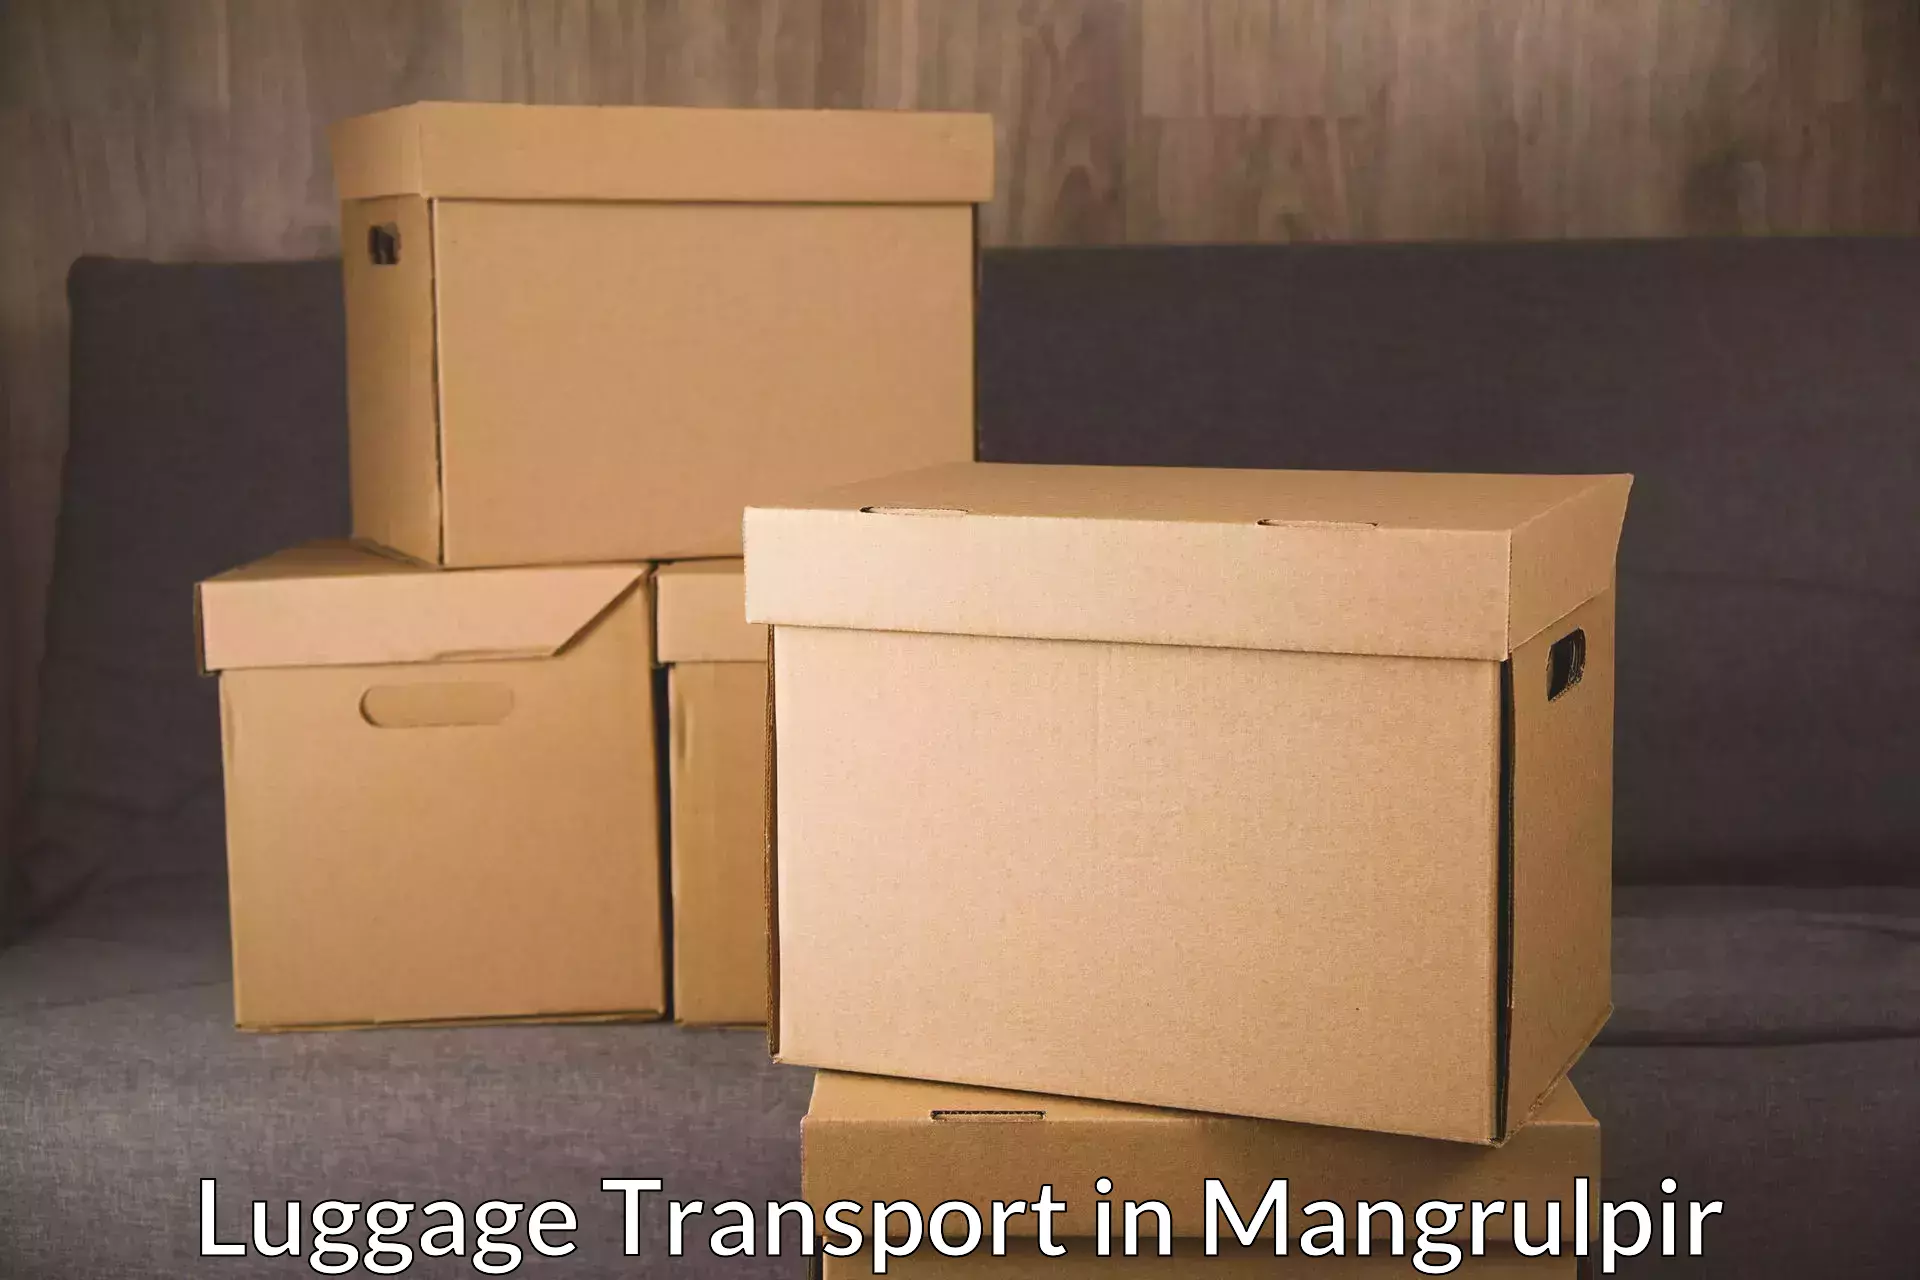 Urban luggage shipping in Mangrulpir